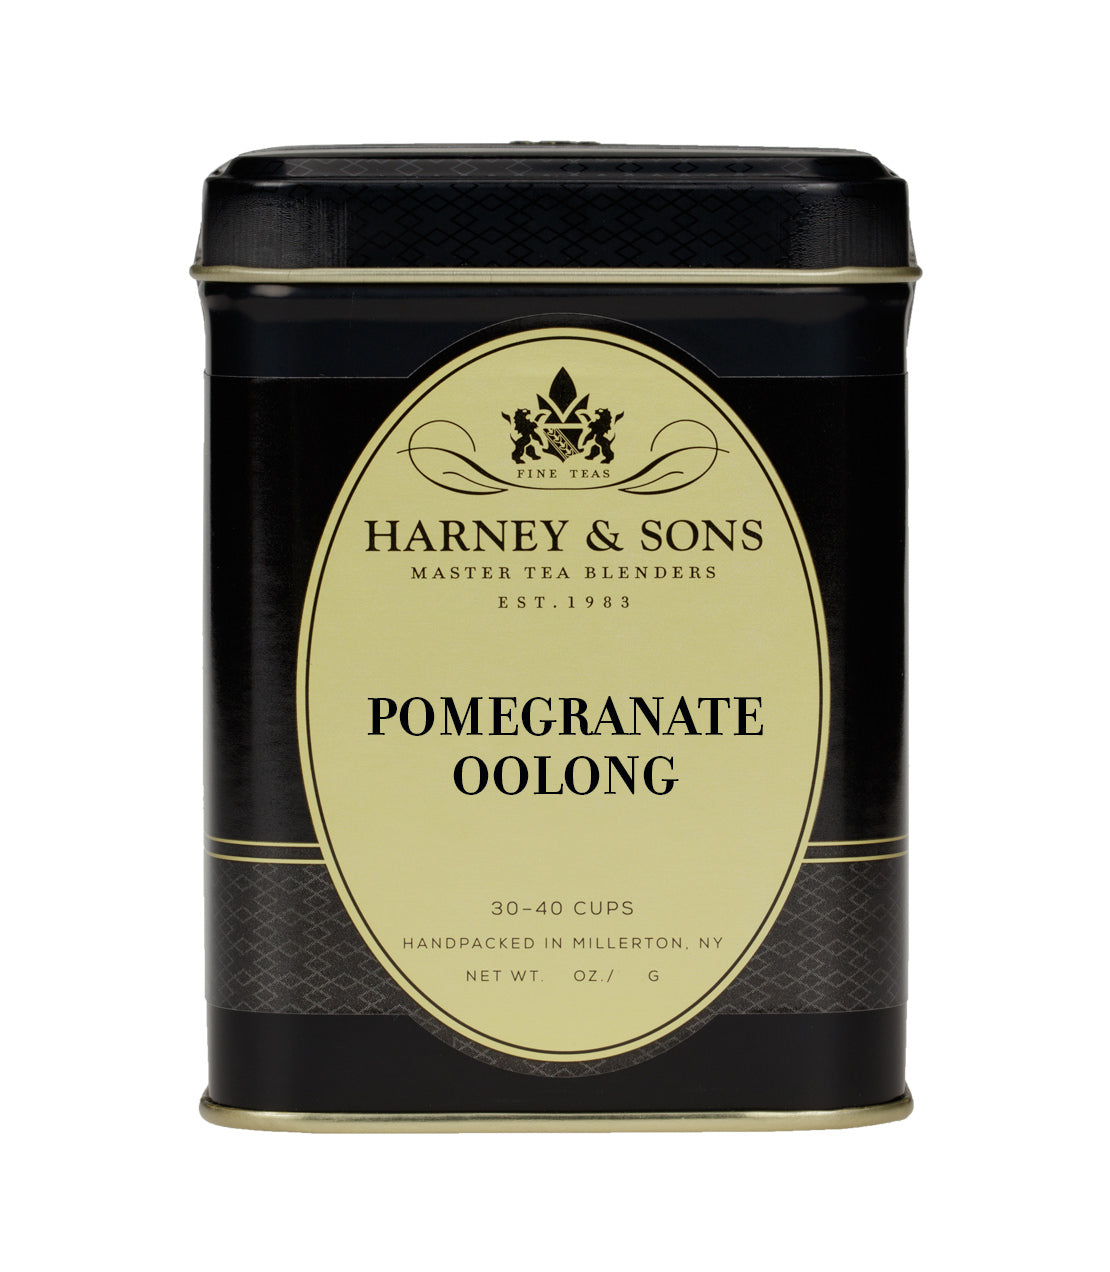 Pomegranate Oolong - Loose 4 oz. Tin - Harney & Sons Fine Teas